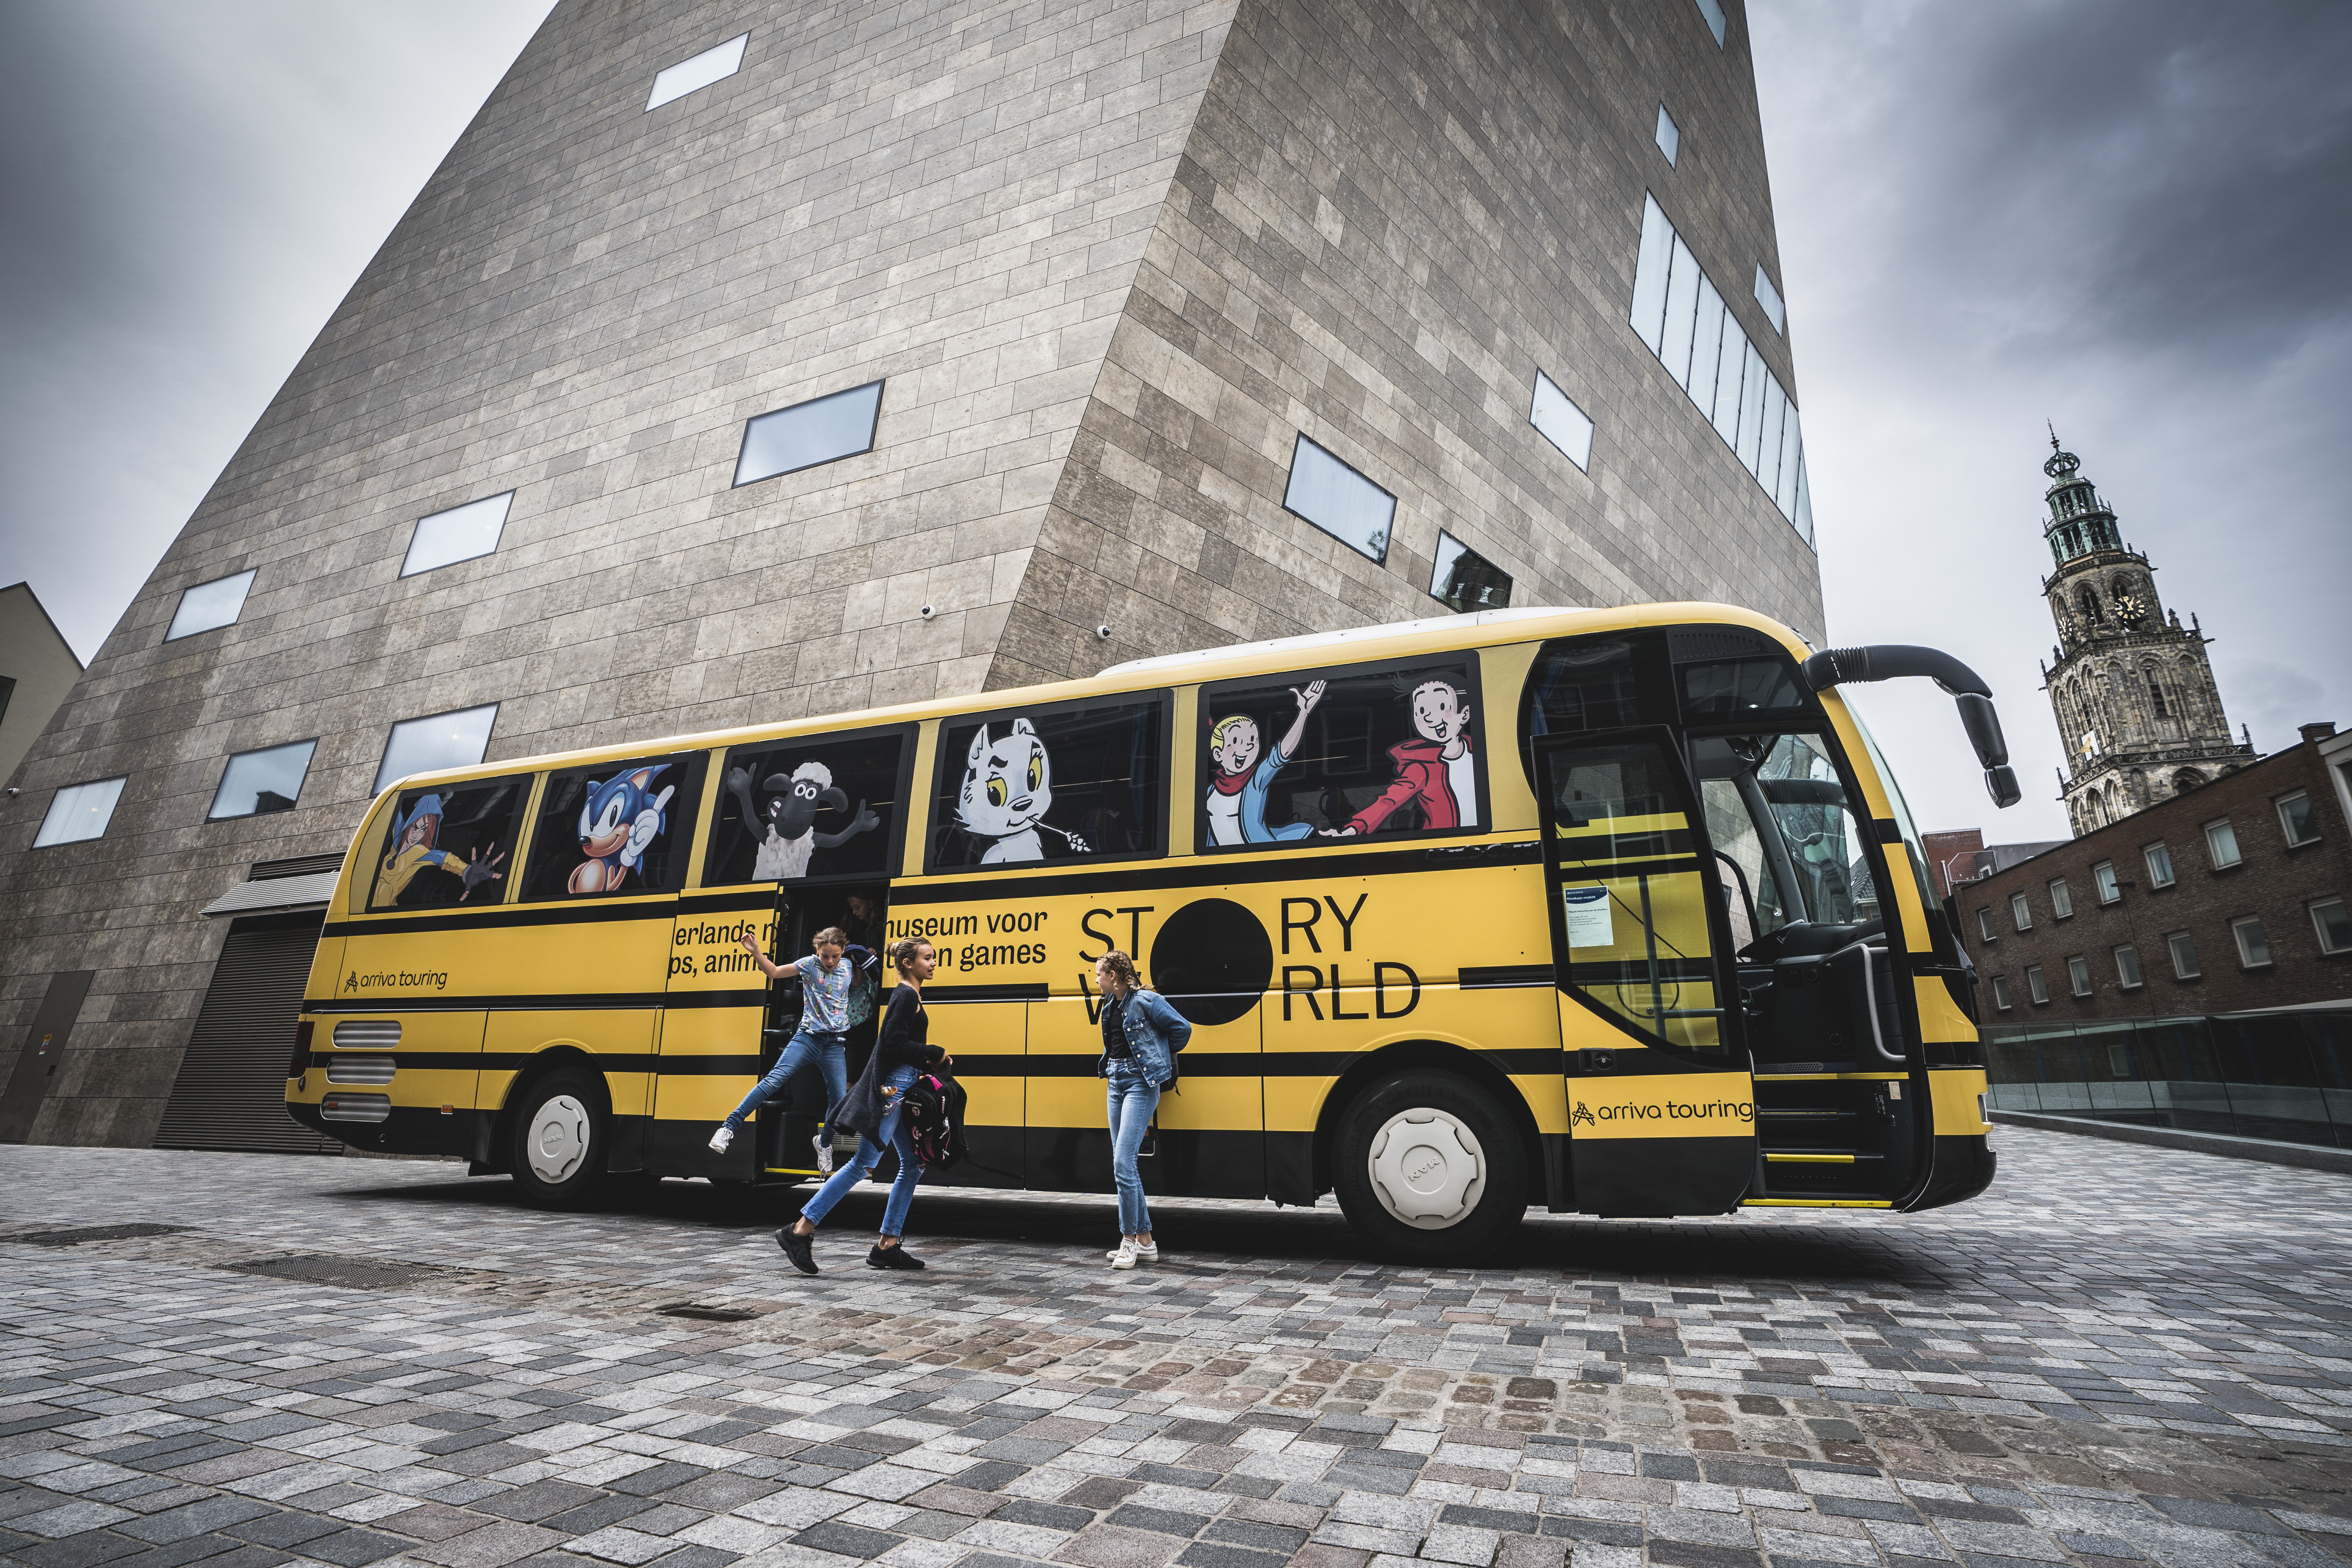 Story world bus - schoolkinderen